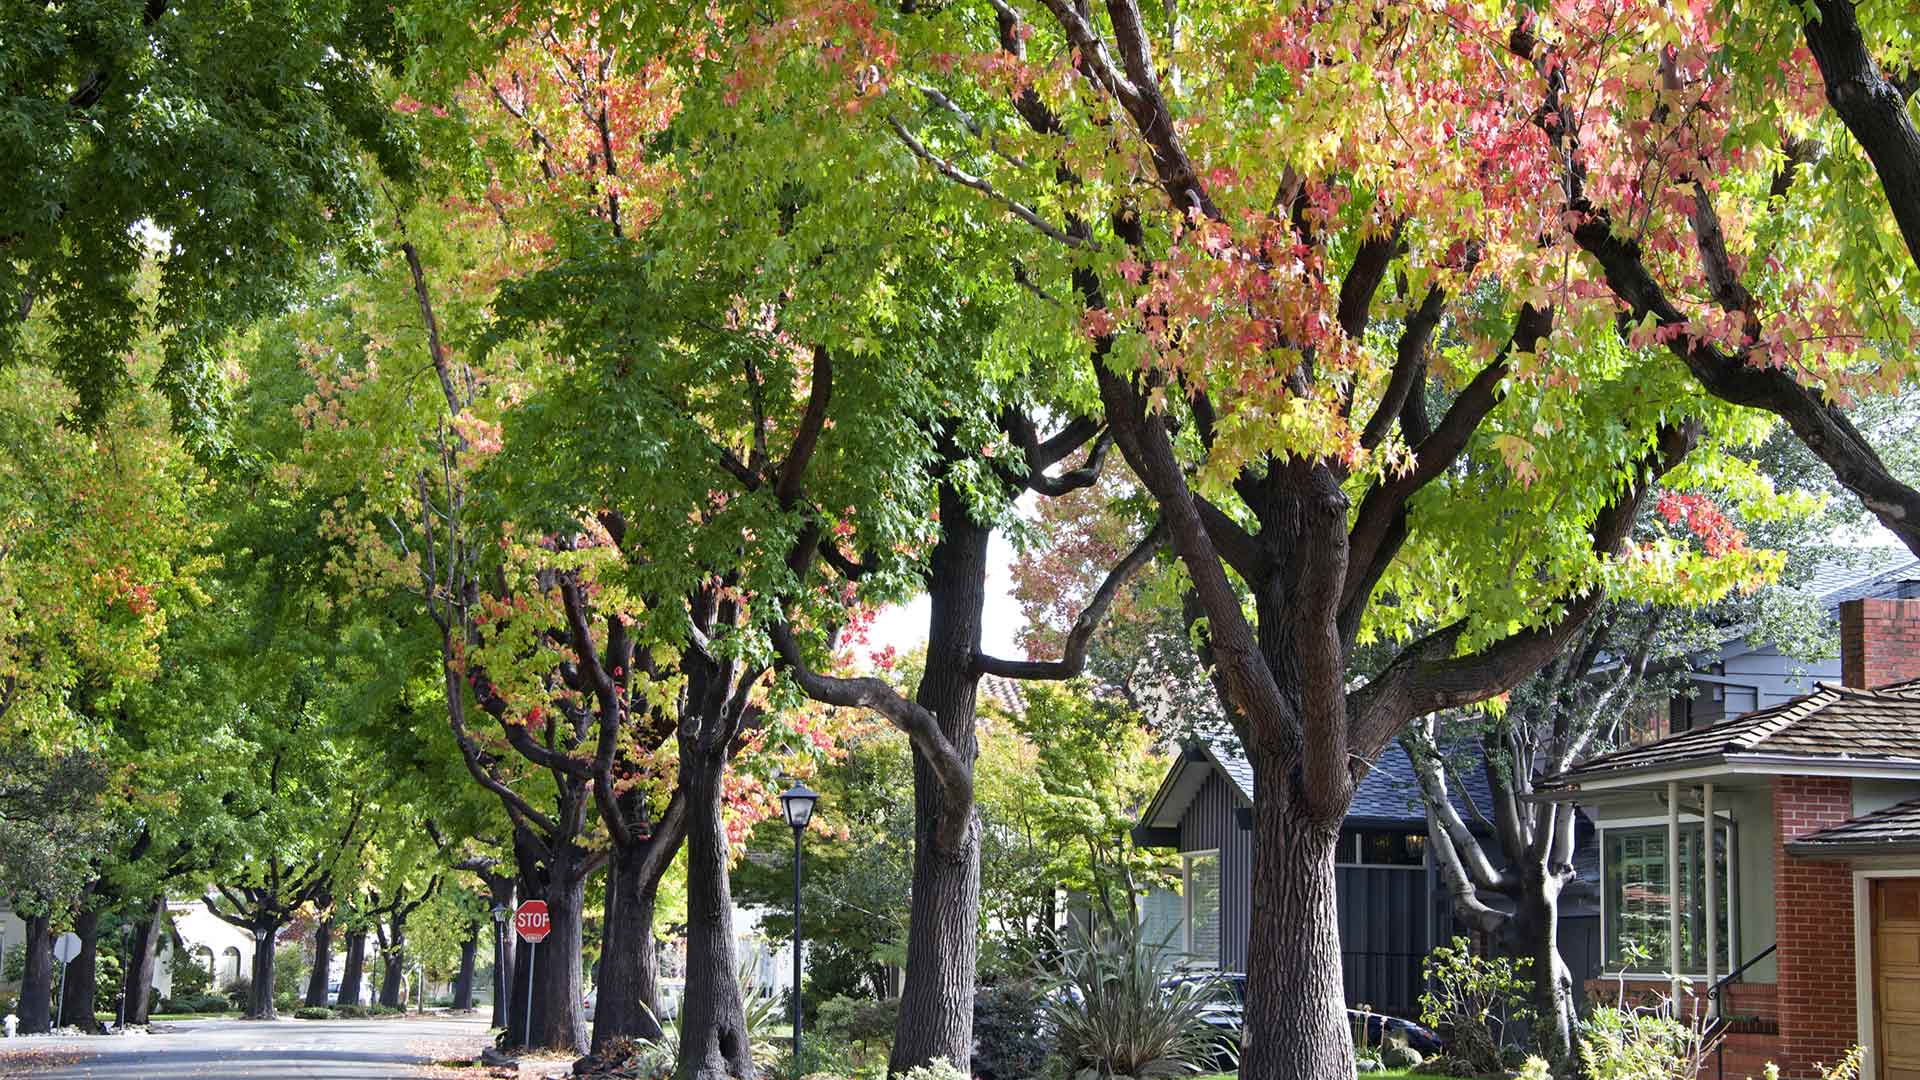 Street view of neighborhood with foliage in Lenox, MI.